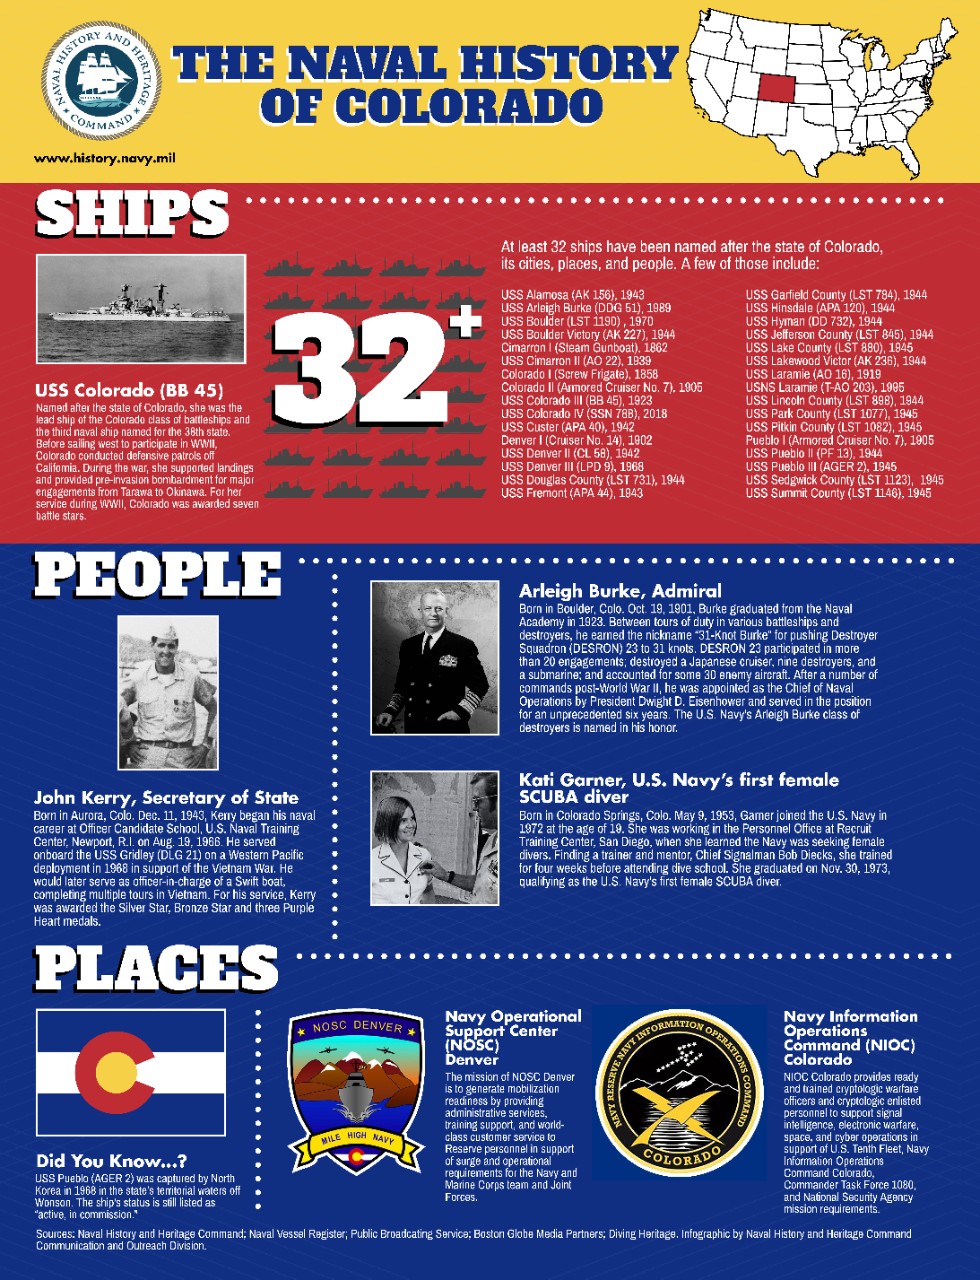 Colorado Naval History Infographic